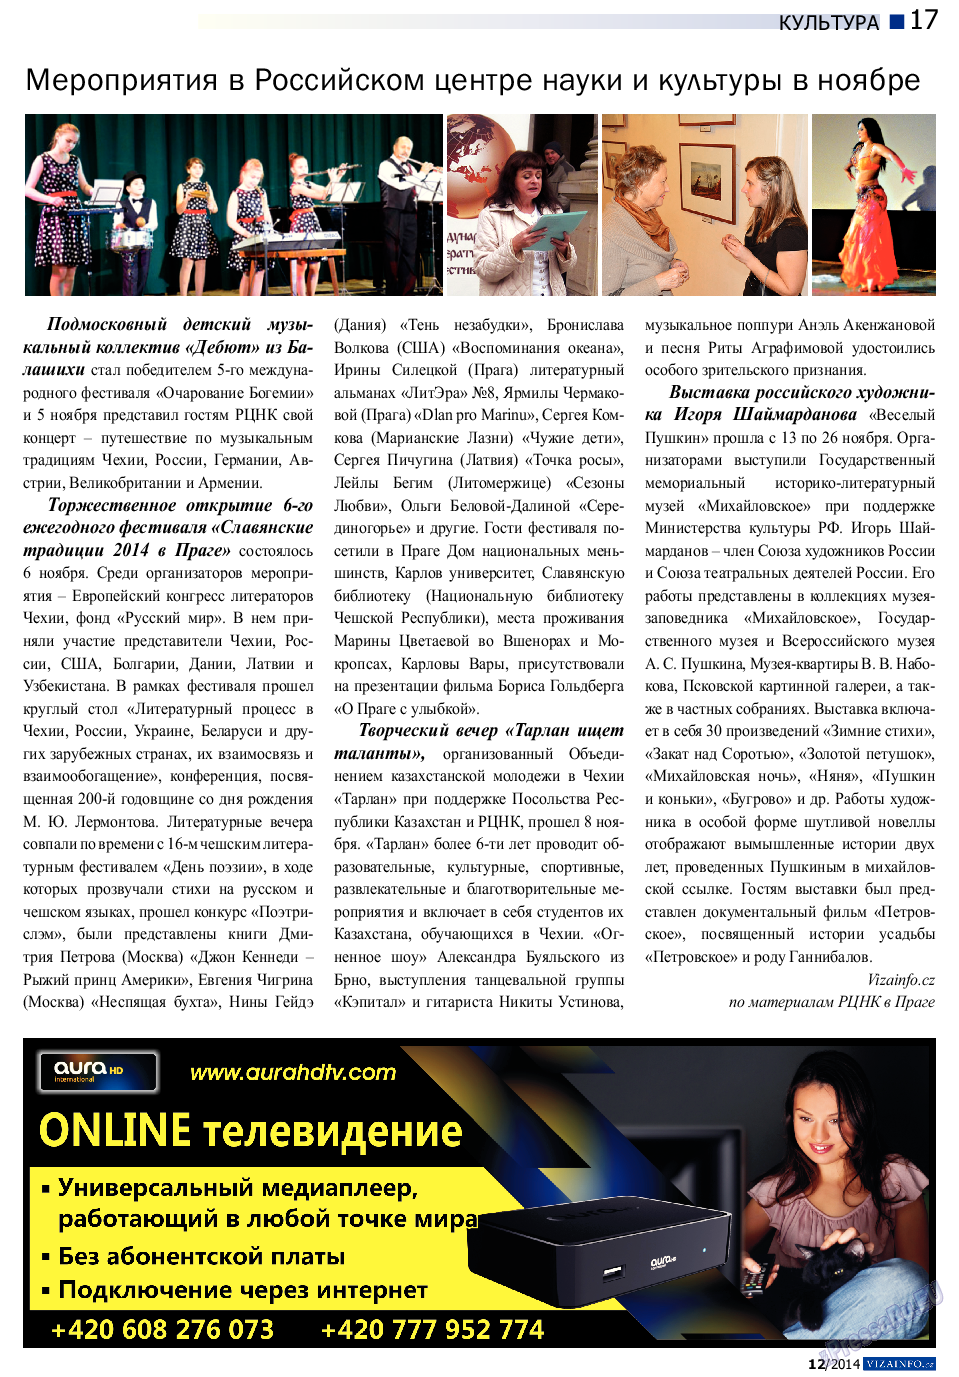 Vizainfo.cz (газета). 2014 год, номер 63, стр. 17